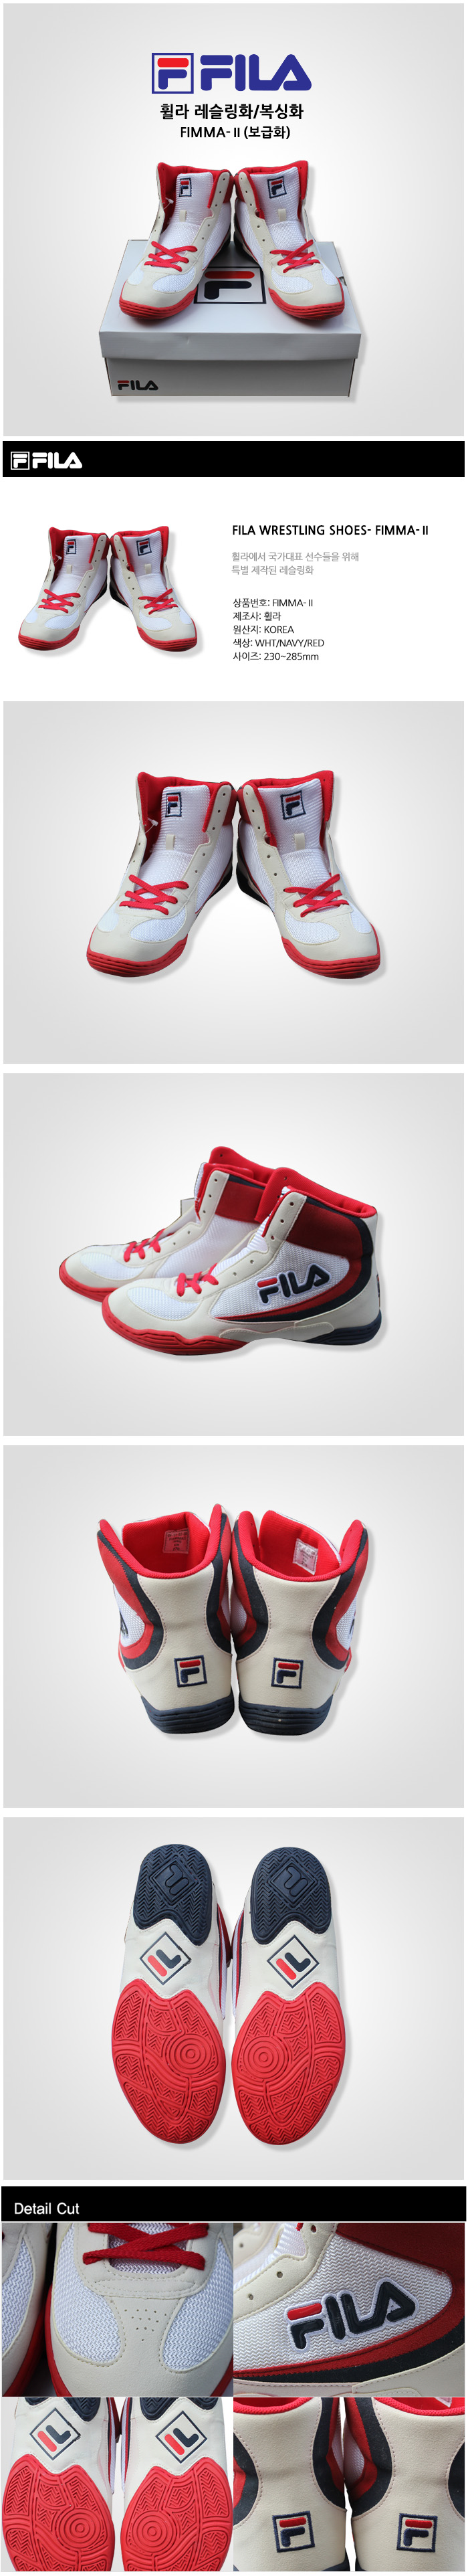 Gmarket - [Fila]FILA /Boxing Shoes/FIMMA-II